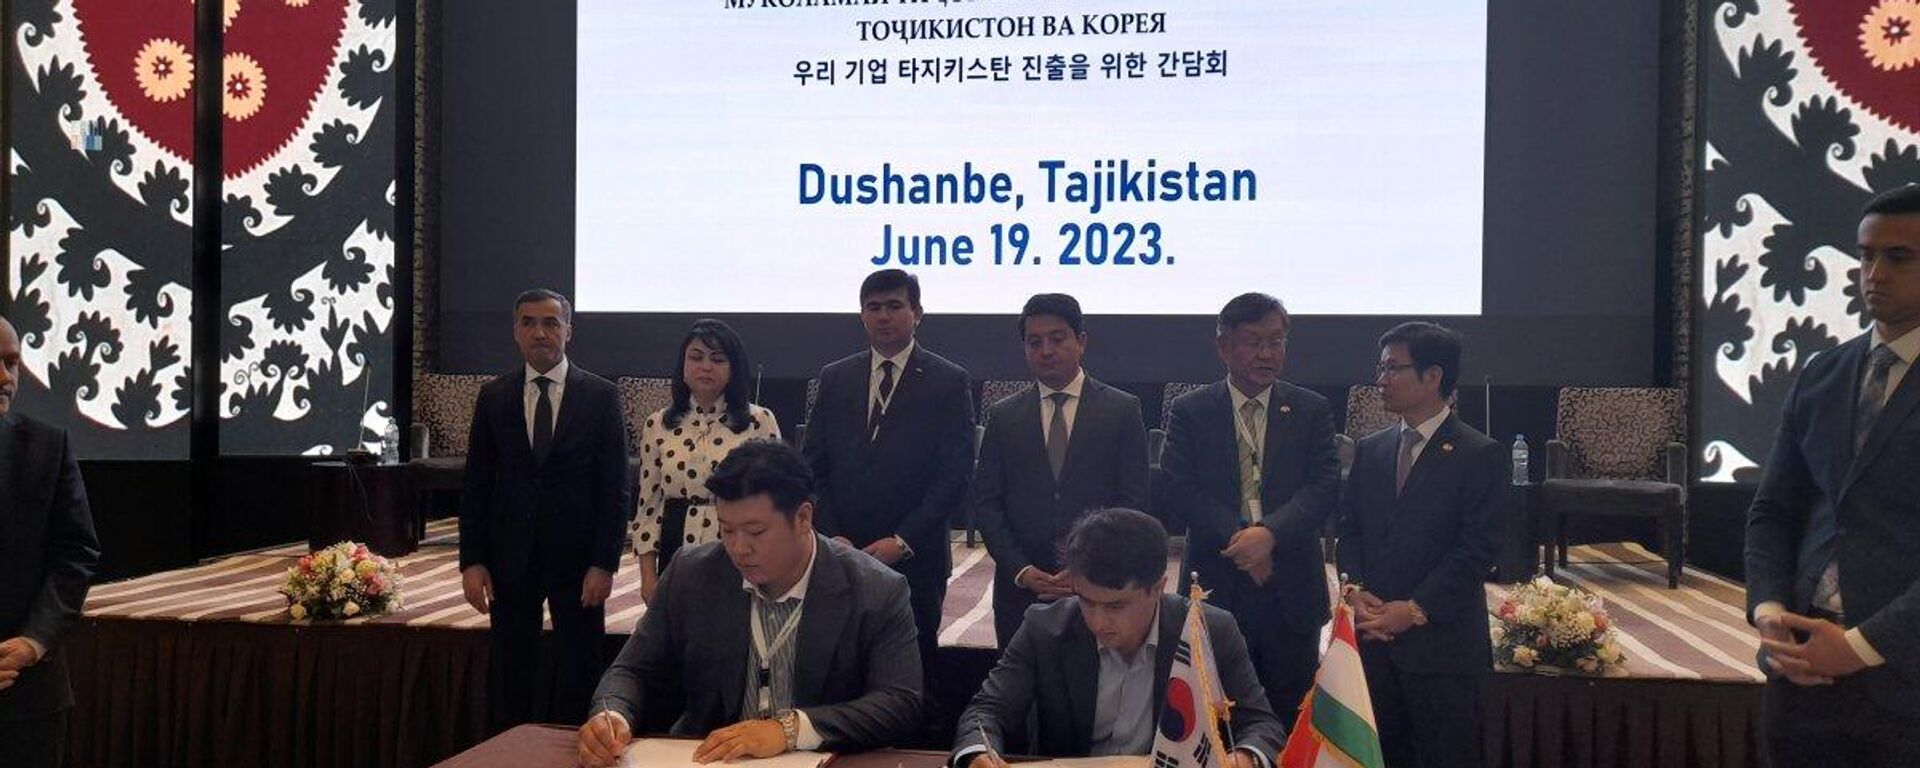 Таджикистан и Южная Корея расширяют инвестиционное сотрудничество - Sputnik Таджикистан, 1920, 19.06.2023